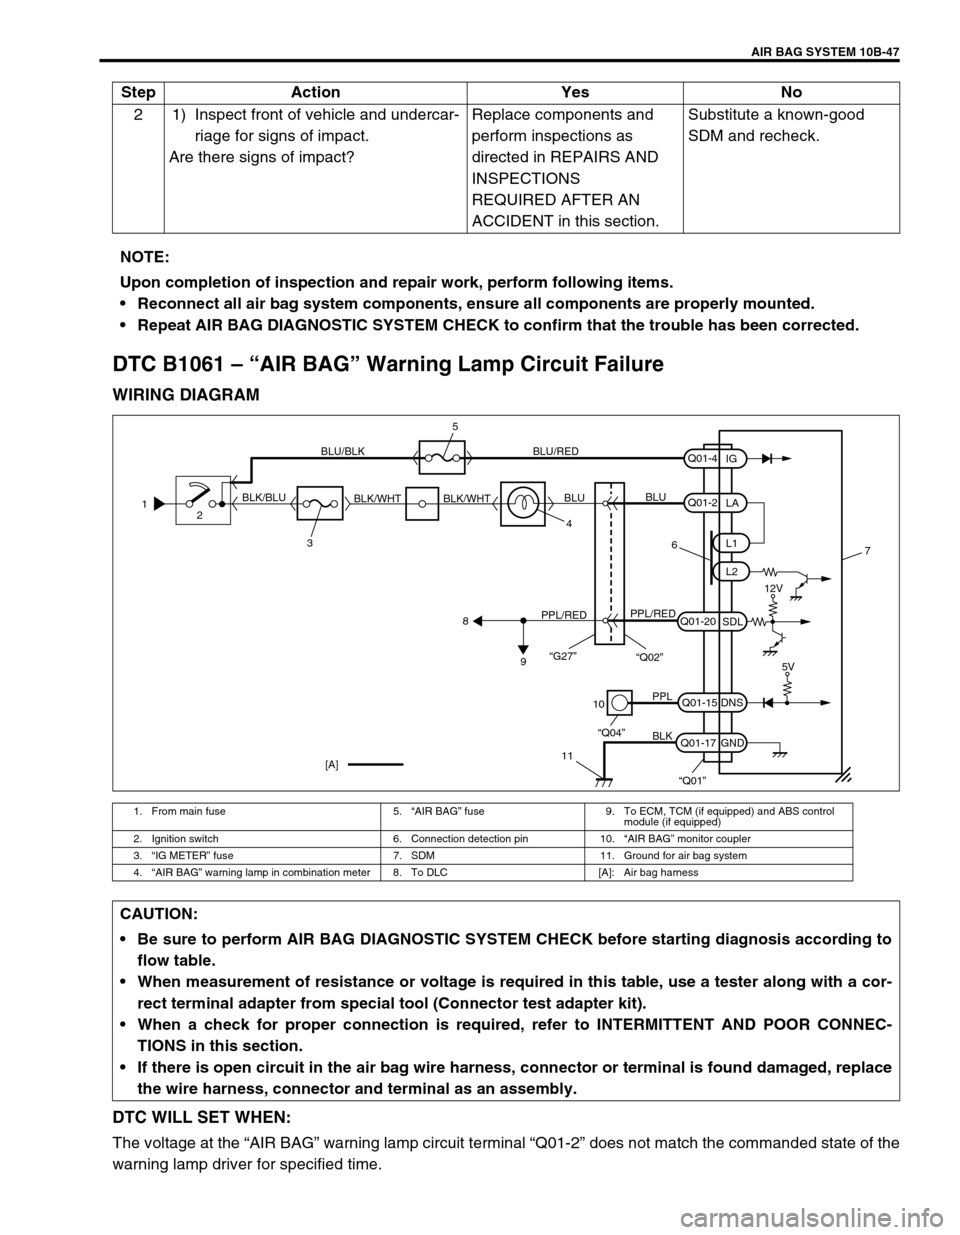 SUZUKI GRAND VITARA 1999 2.G Repair Manual AIR BAG SYSTEM 10B-47
DTC B1061 – “AIR BAG” Warning Lamp Circuit Failure
WIRING DIAGRAM
DTC WILL SET WHEN:
The voltage at the “AIR BAG” warning lamp circuit terminal “Q01-2” does not mat